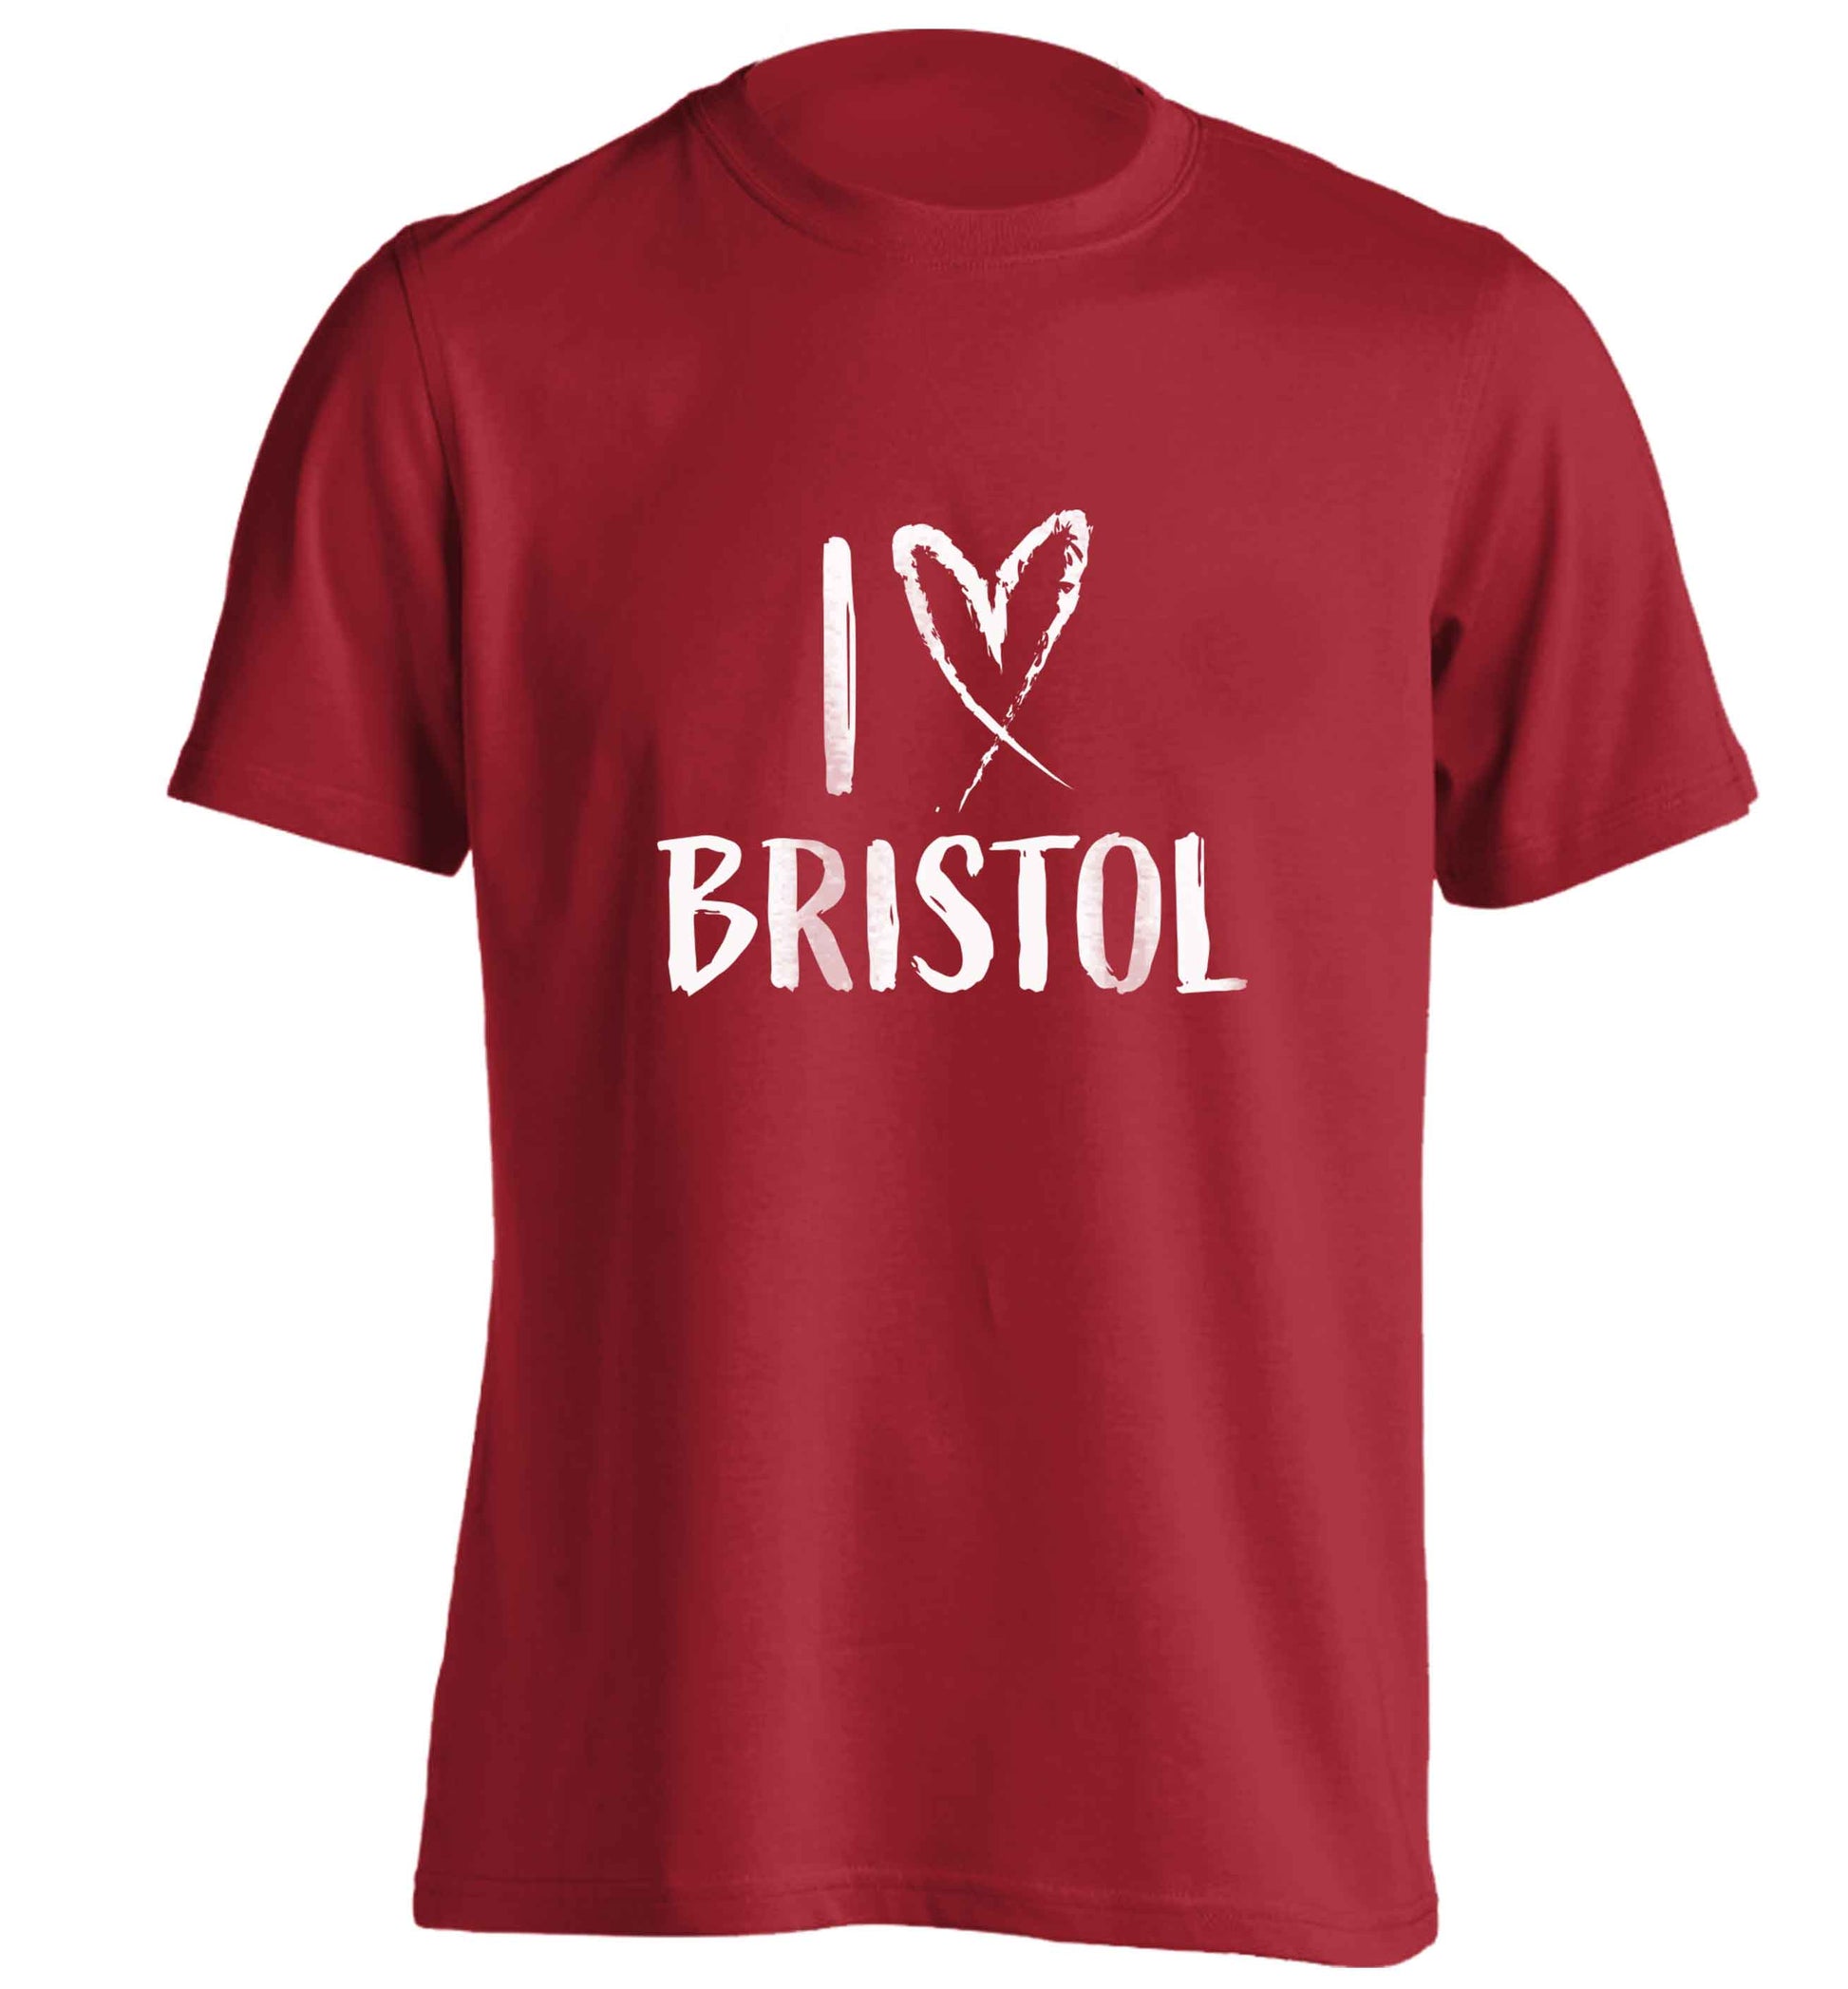 I love Bristol adults unisex red Tshirt 2XL